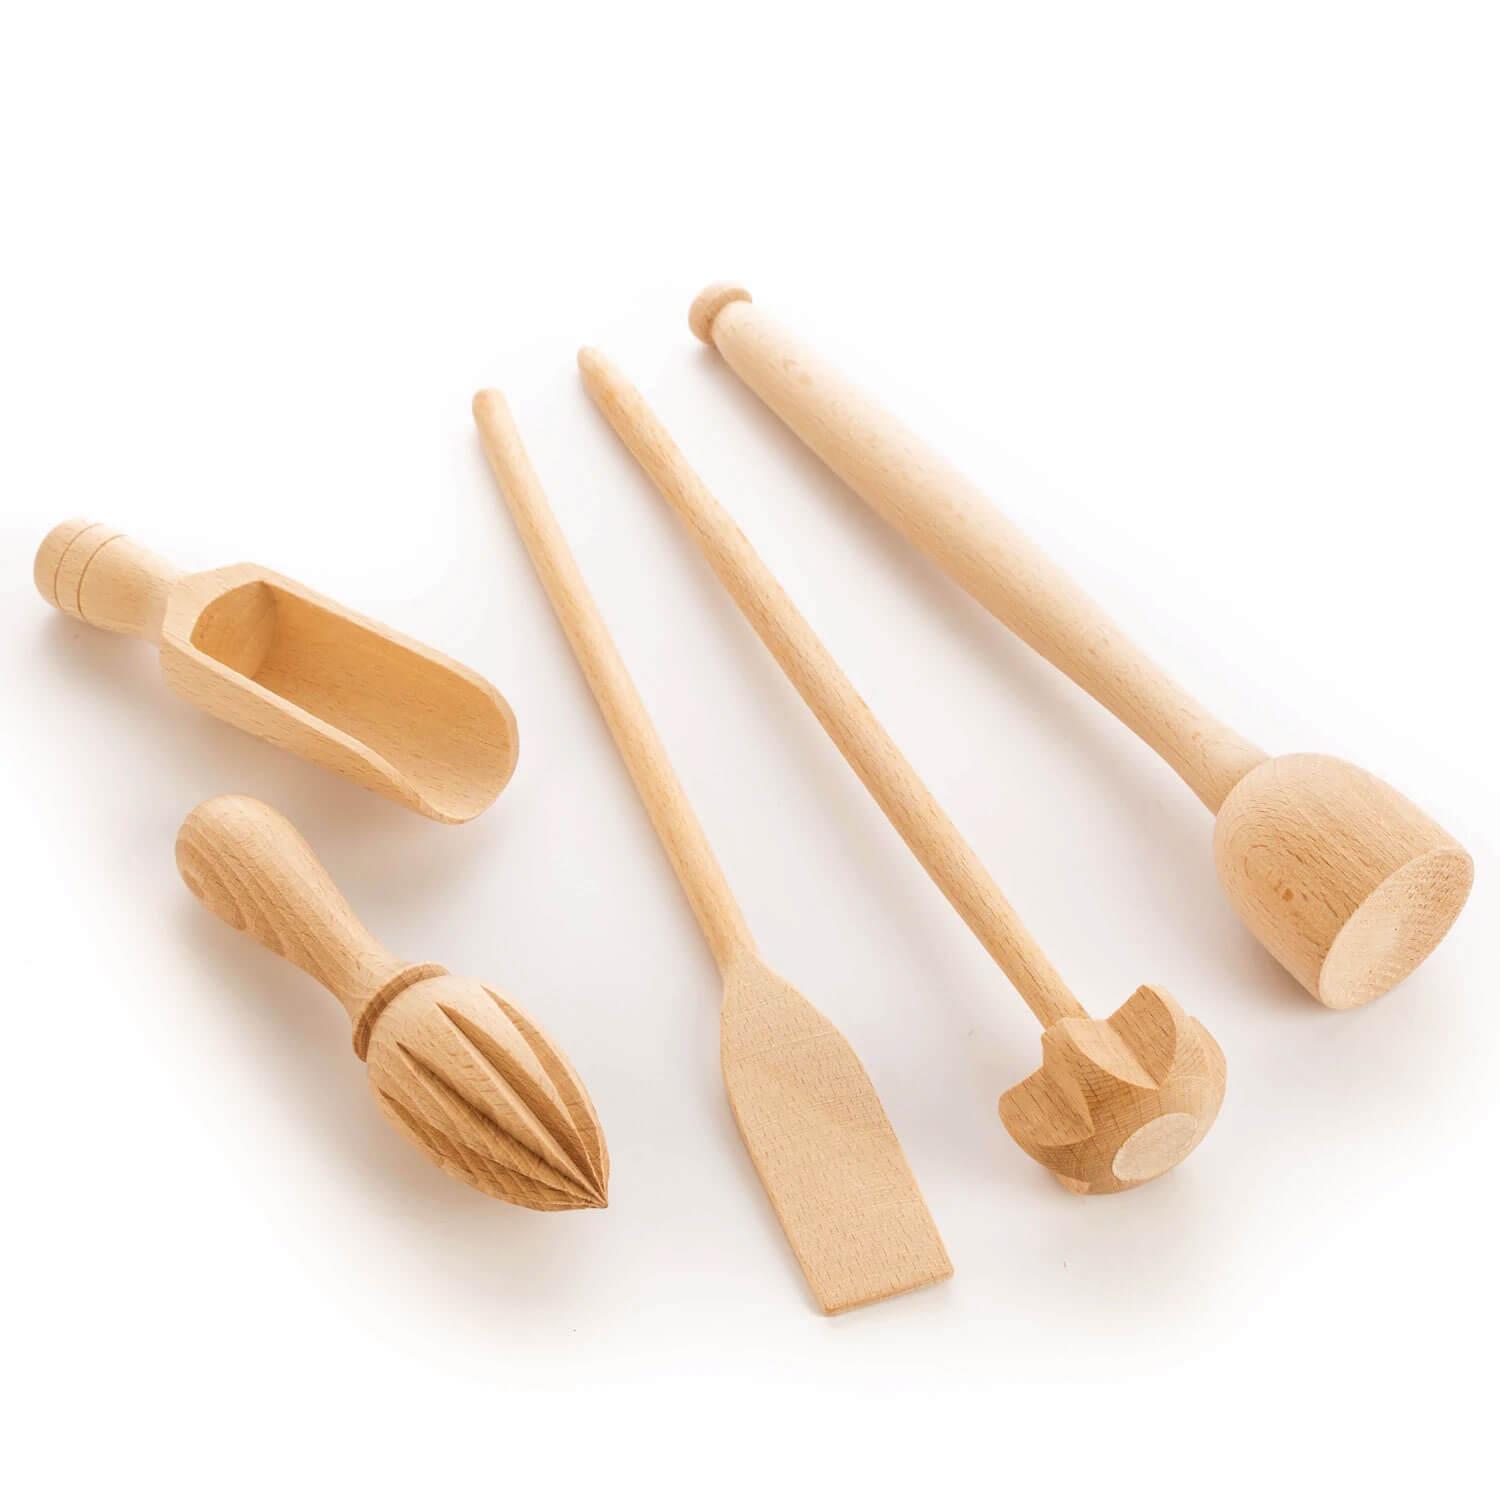 https://cdn.shopify.com/s/files/1/0515/2440/3381/products/5-piece-wooden-kitchen-utensils-set-tuuli-476.jpg